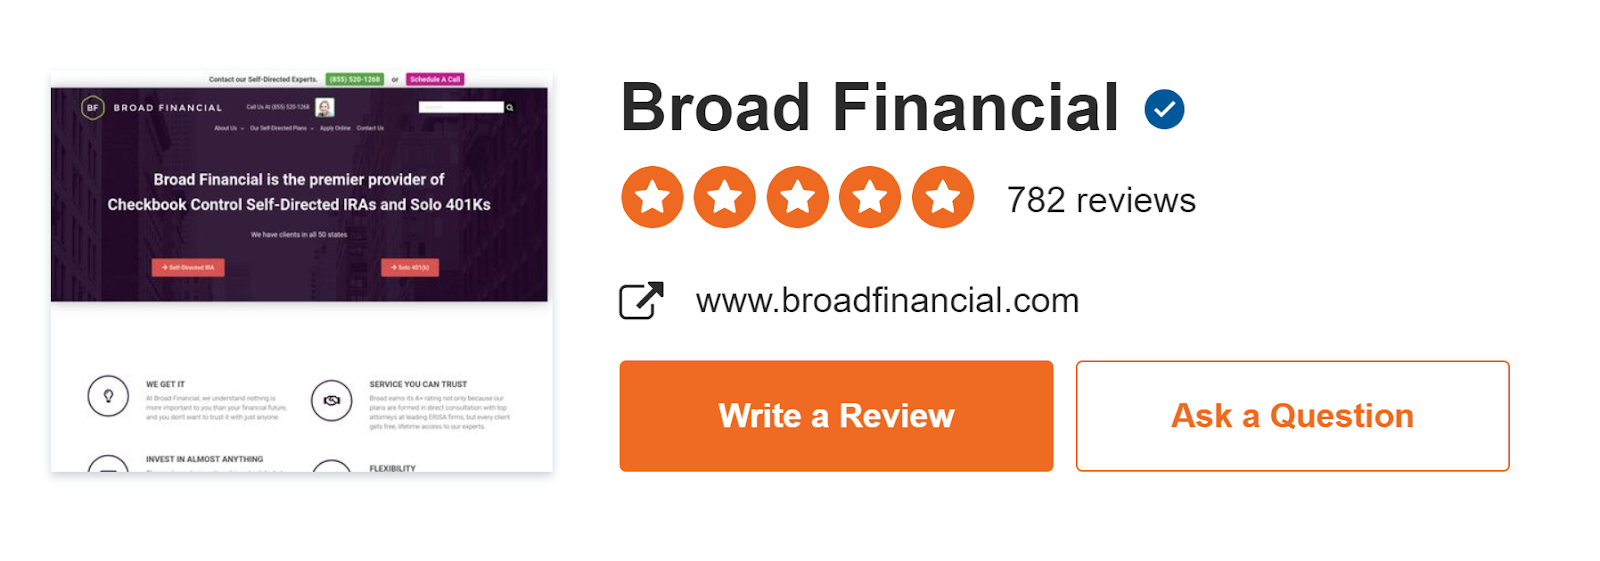 broad financial reviews